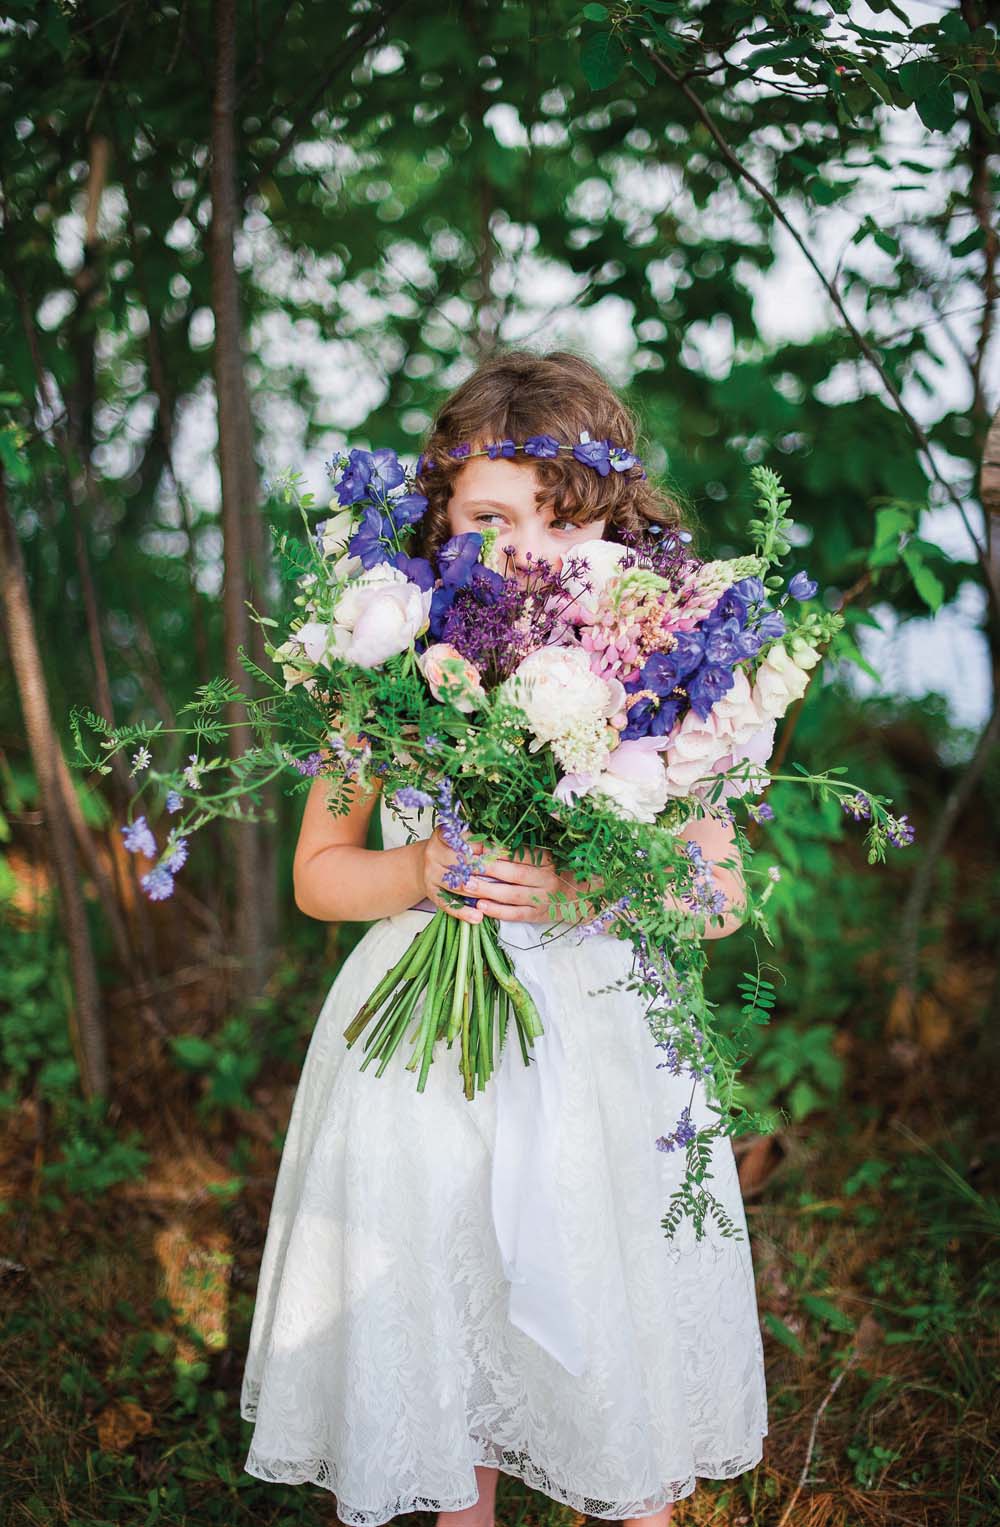 An Ultra Violet-Inspired Styled Shoot In Quebec - Flower girl